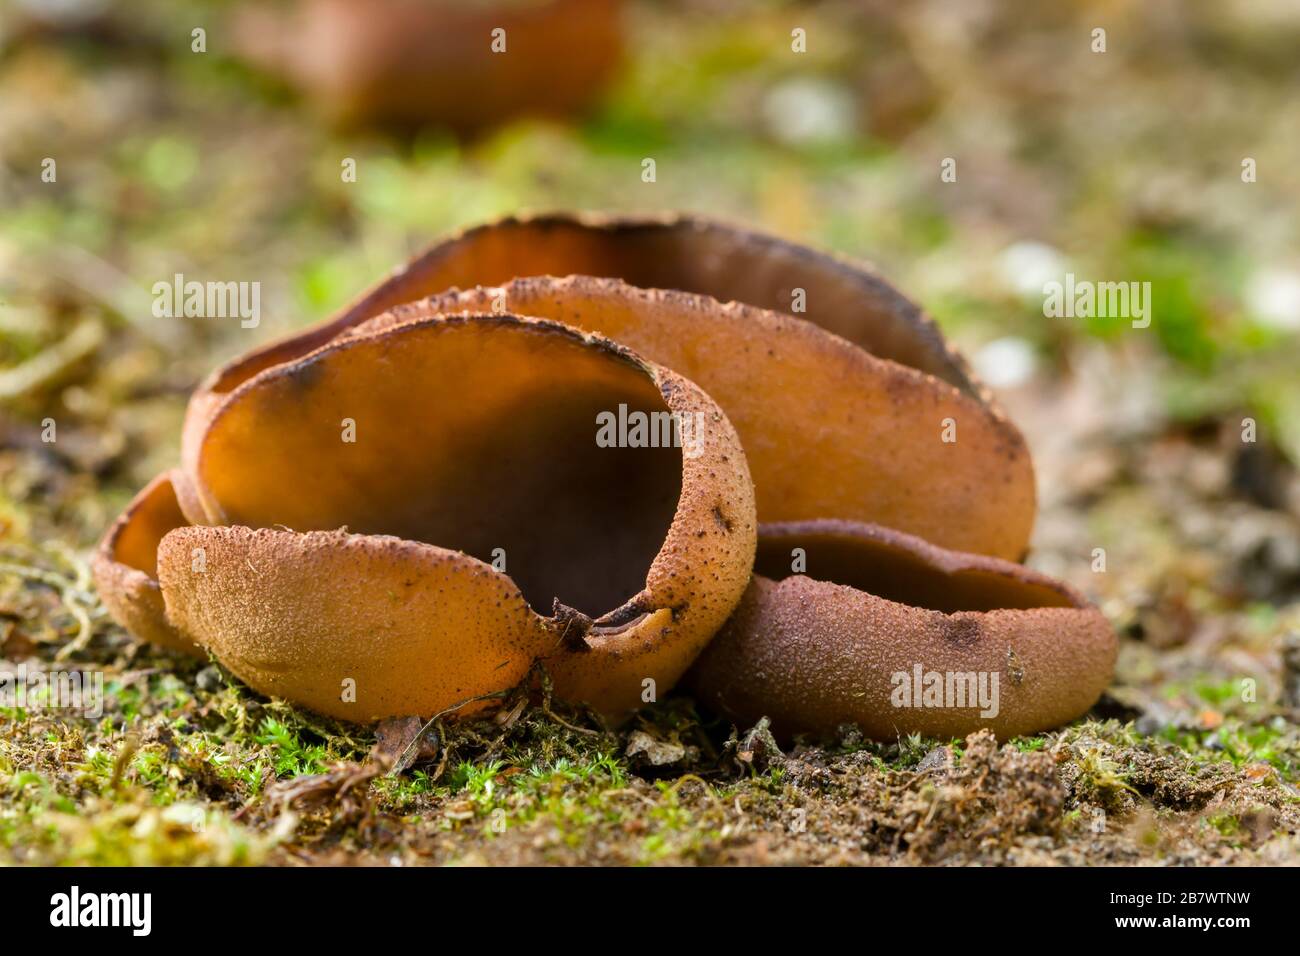 Peziza badia or Bay Cup mushroom growing on soil Stock Photo